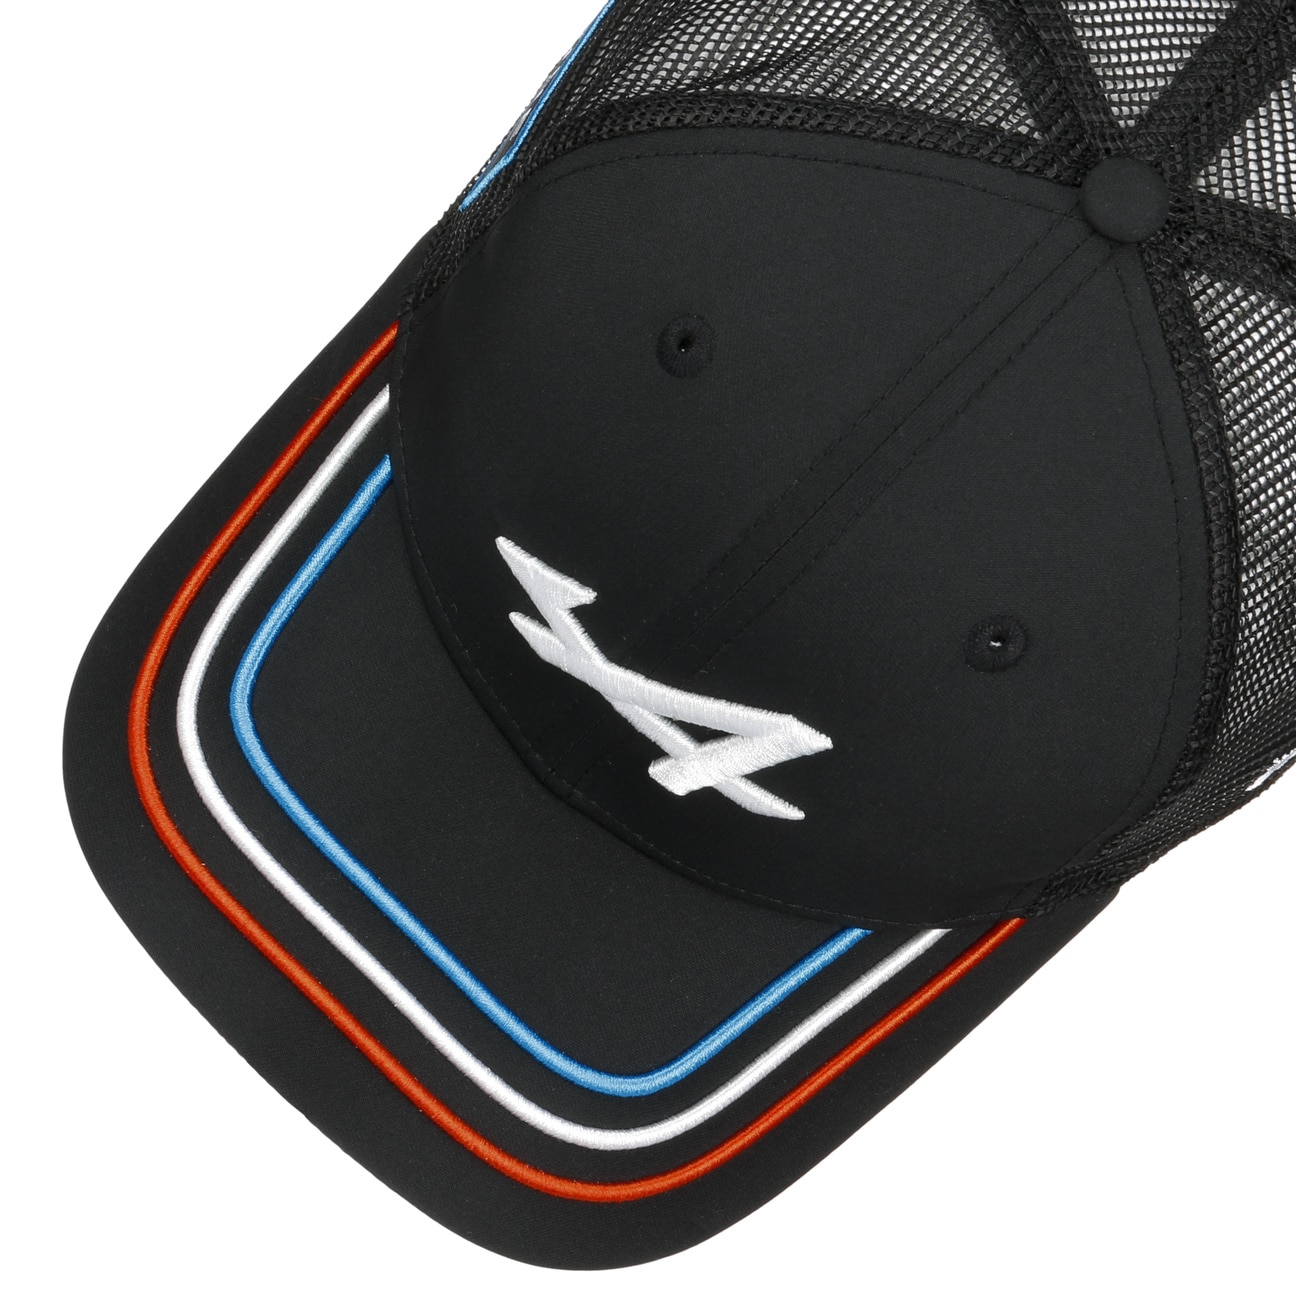 Alpine Racing F1 New Era Team Color Bucket Hat - Black